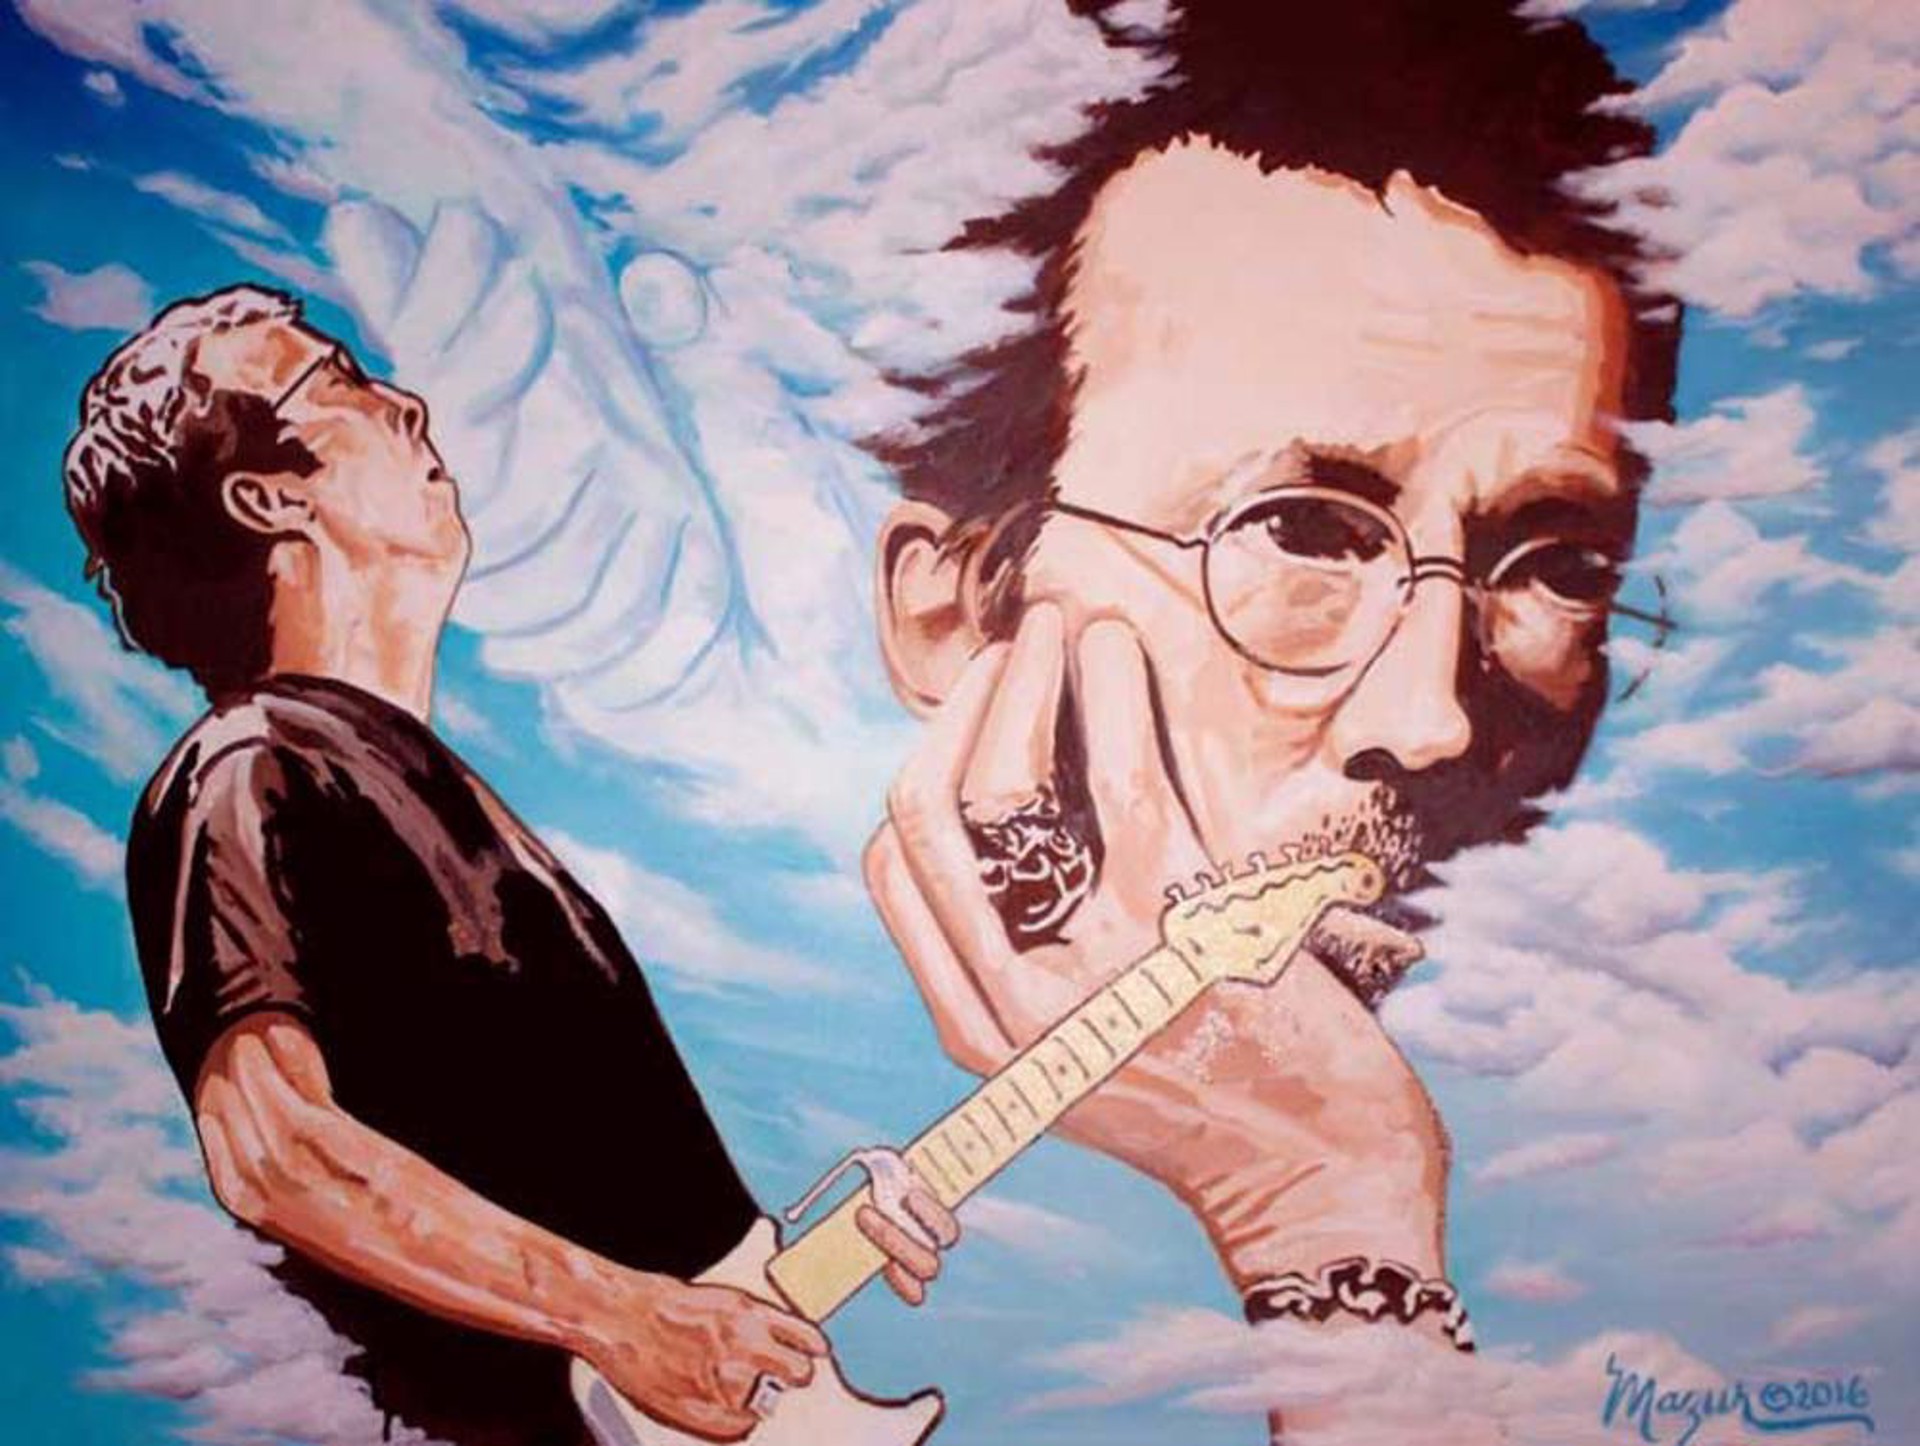 Eric Clapton by Ruby Mazur